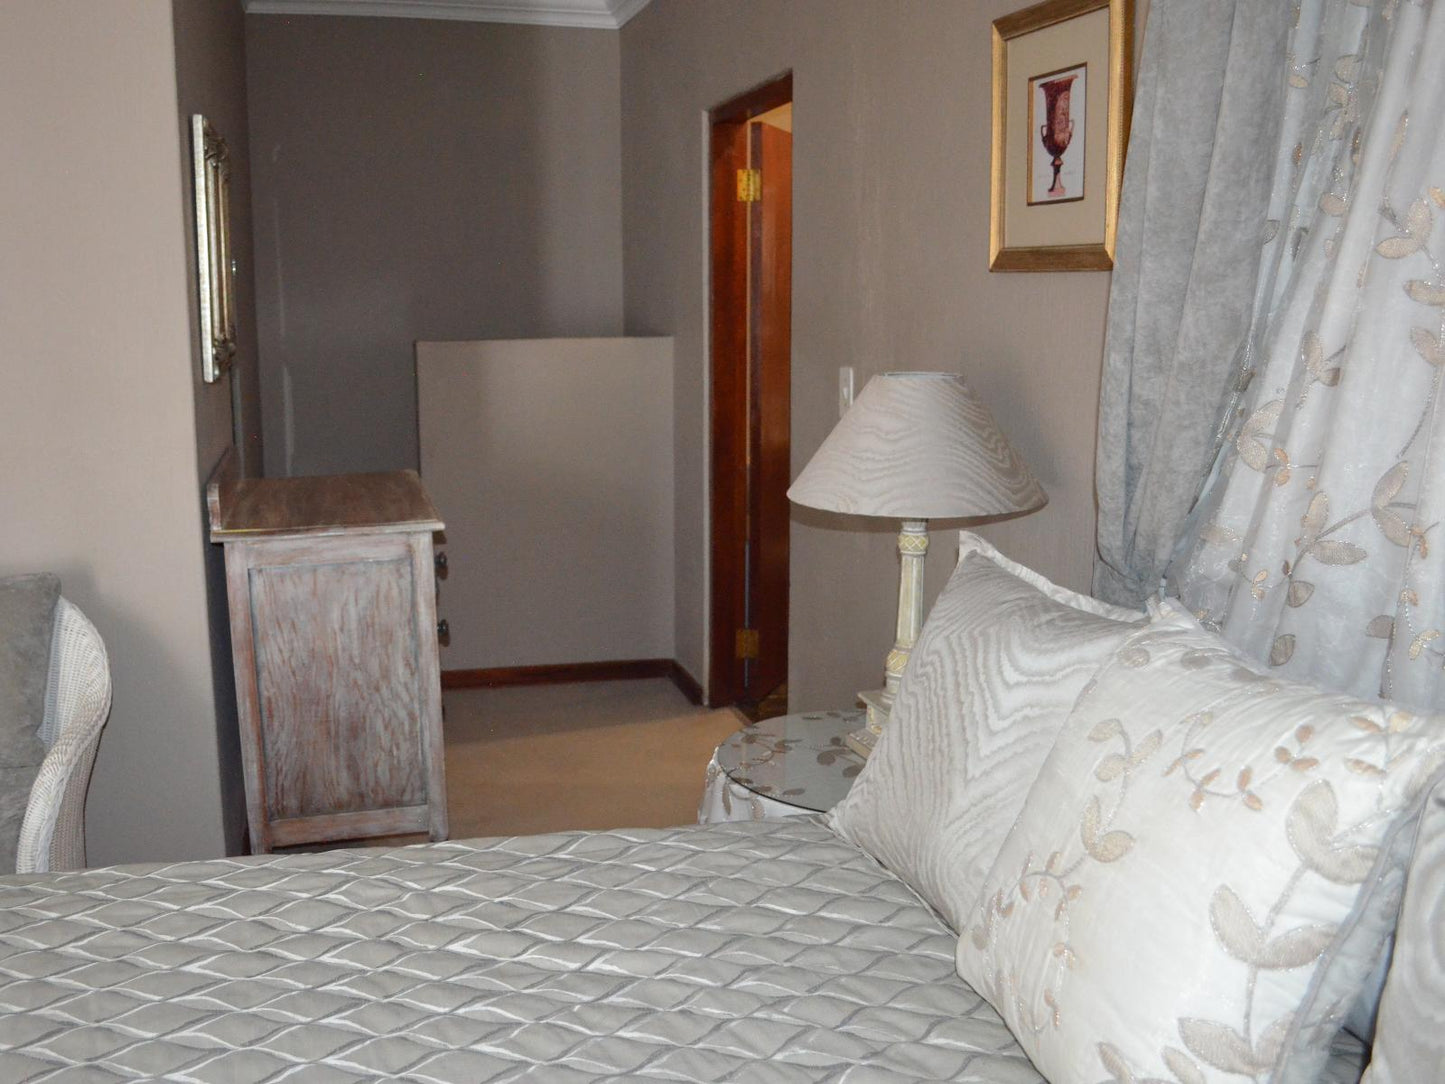 Luxury Prestige Room 4 @ Leeuwenhof Country Lodge & Garden Spa